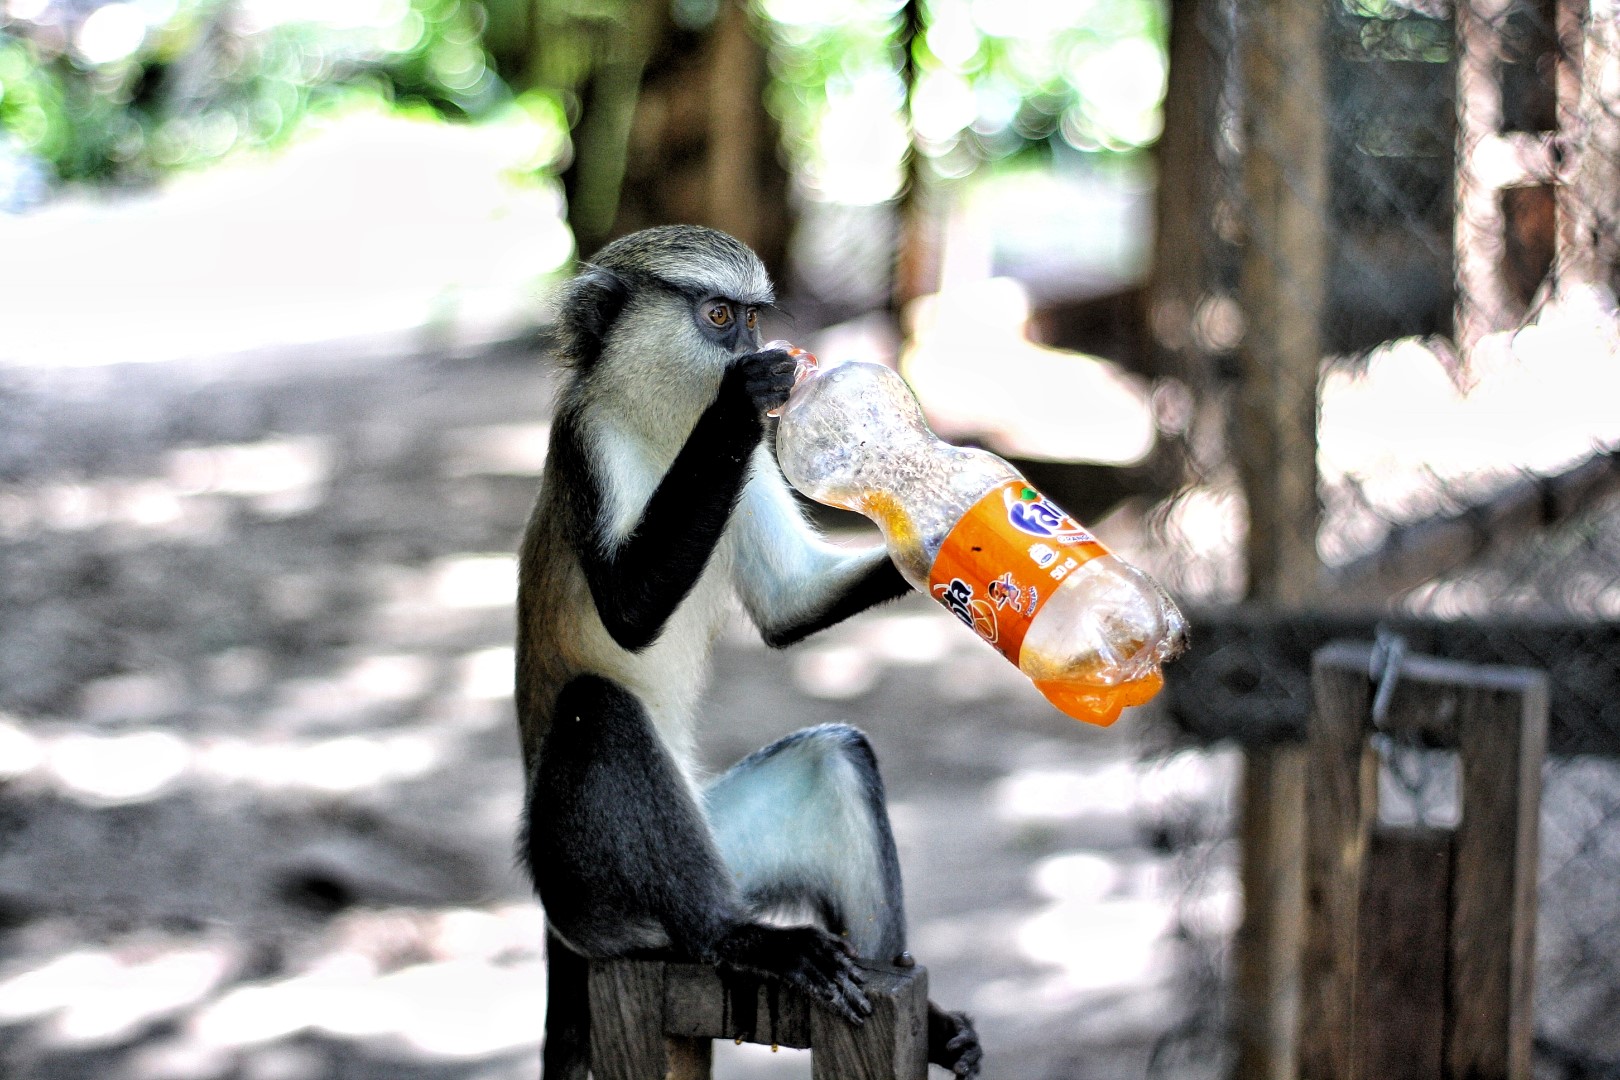 Monkey at the lufasi park in lekki drinking a bottle of fanta